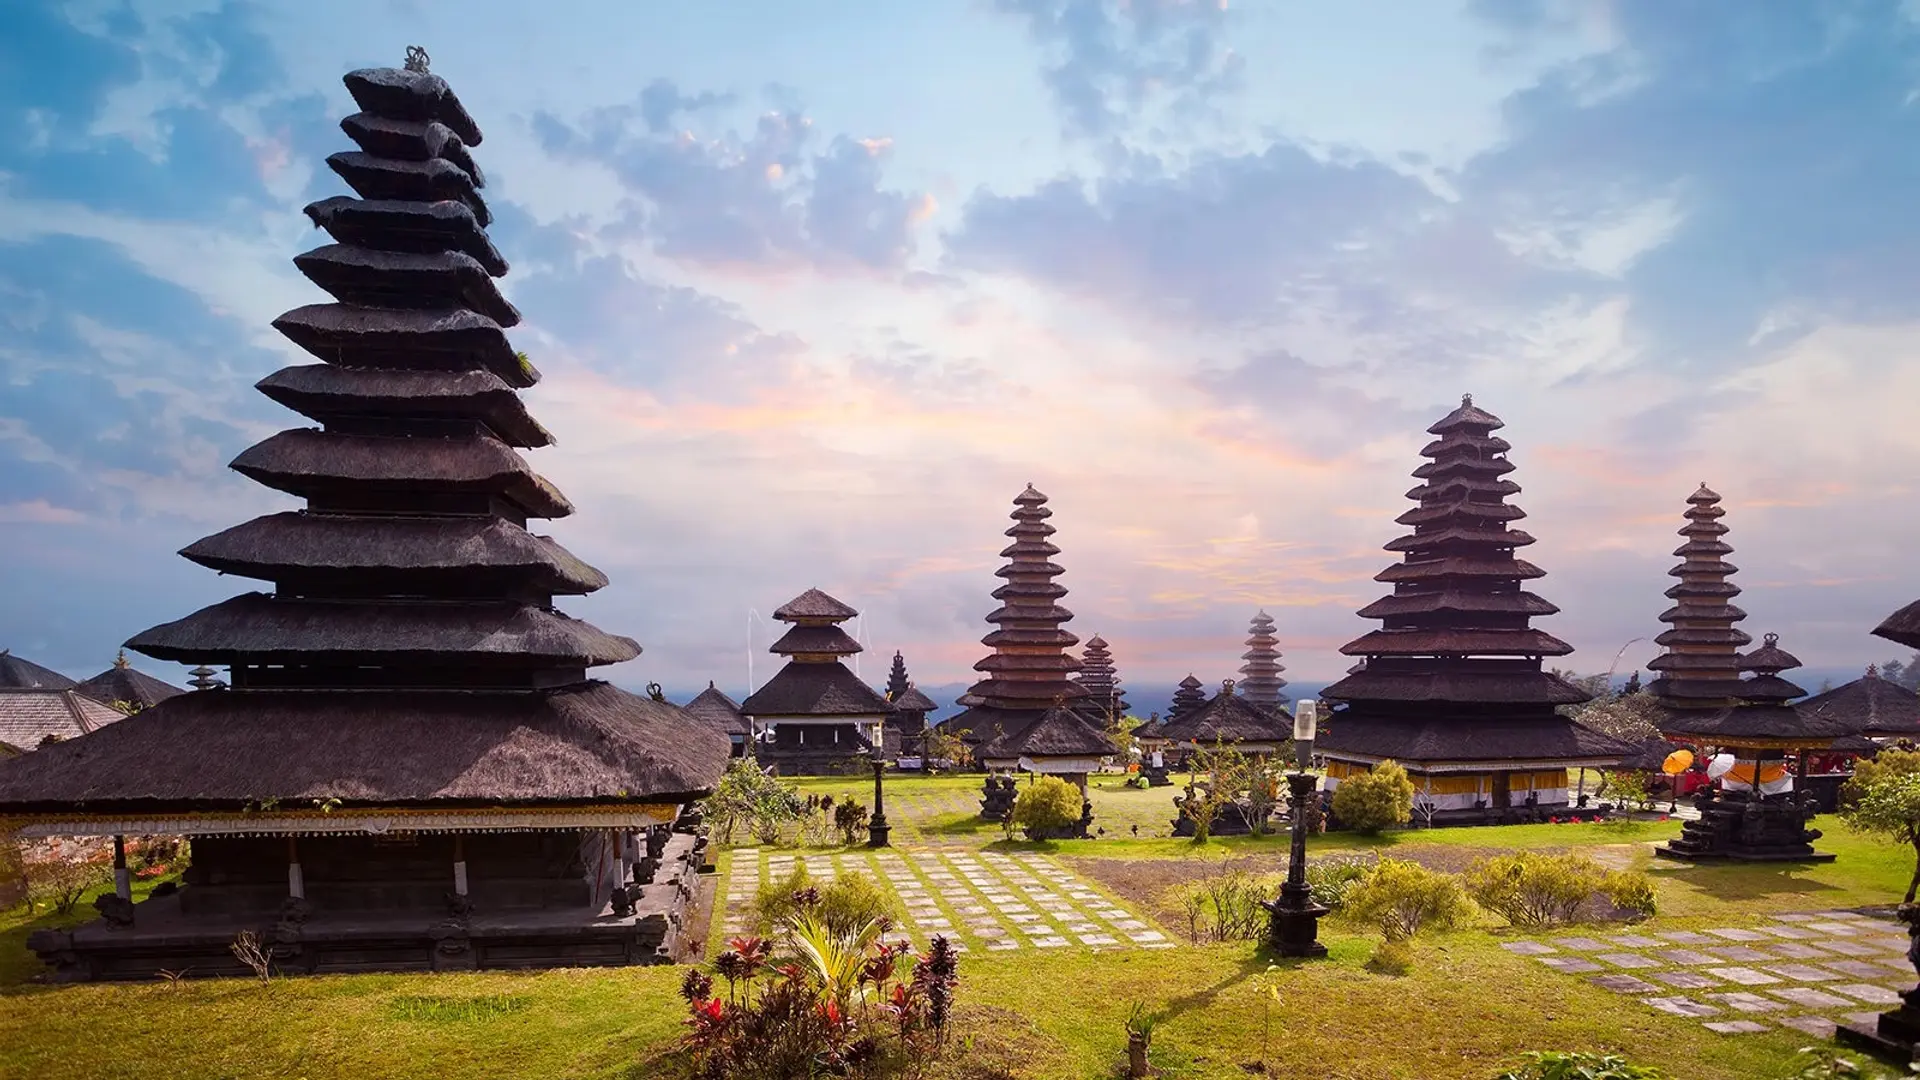 Destinations Articles - Bali Travel Guide